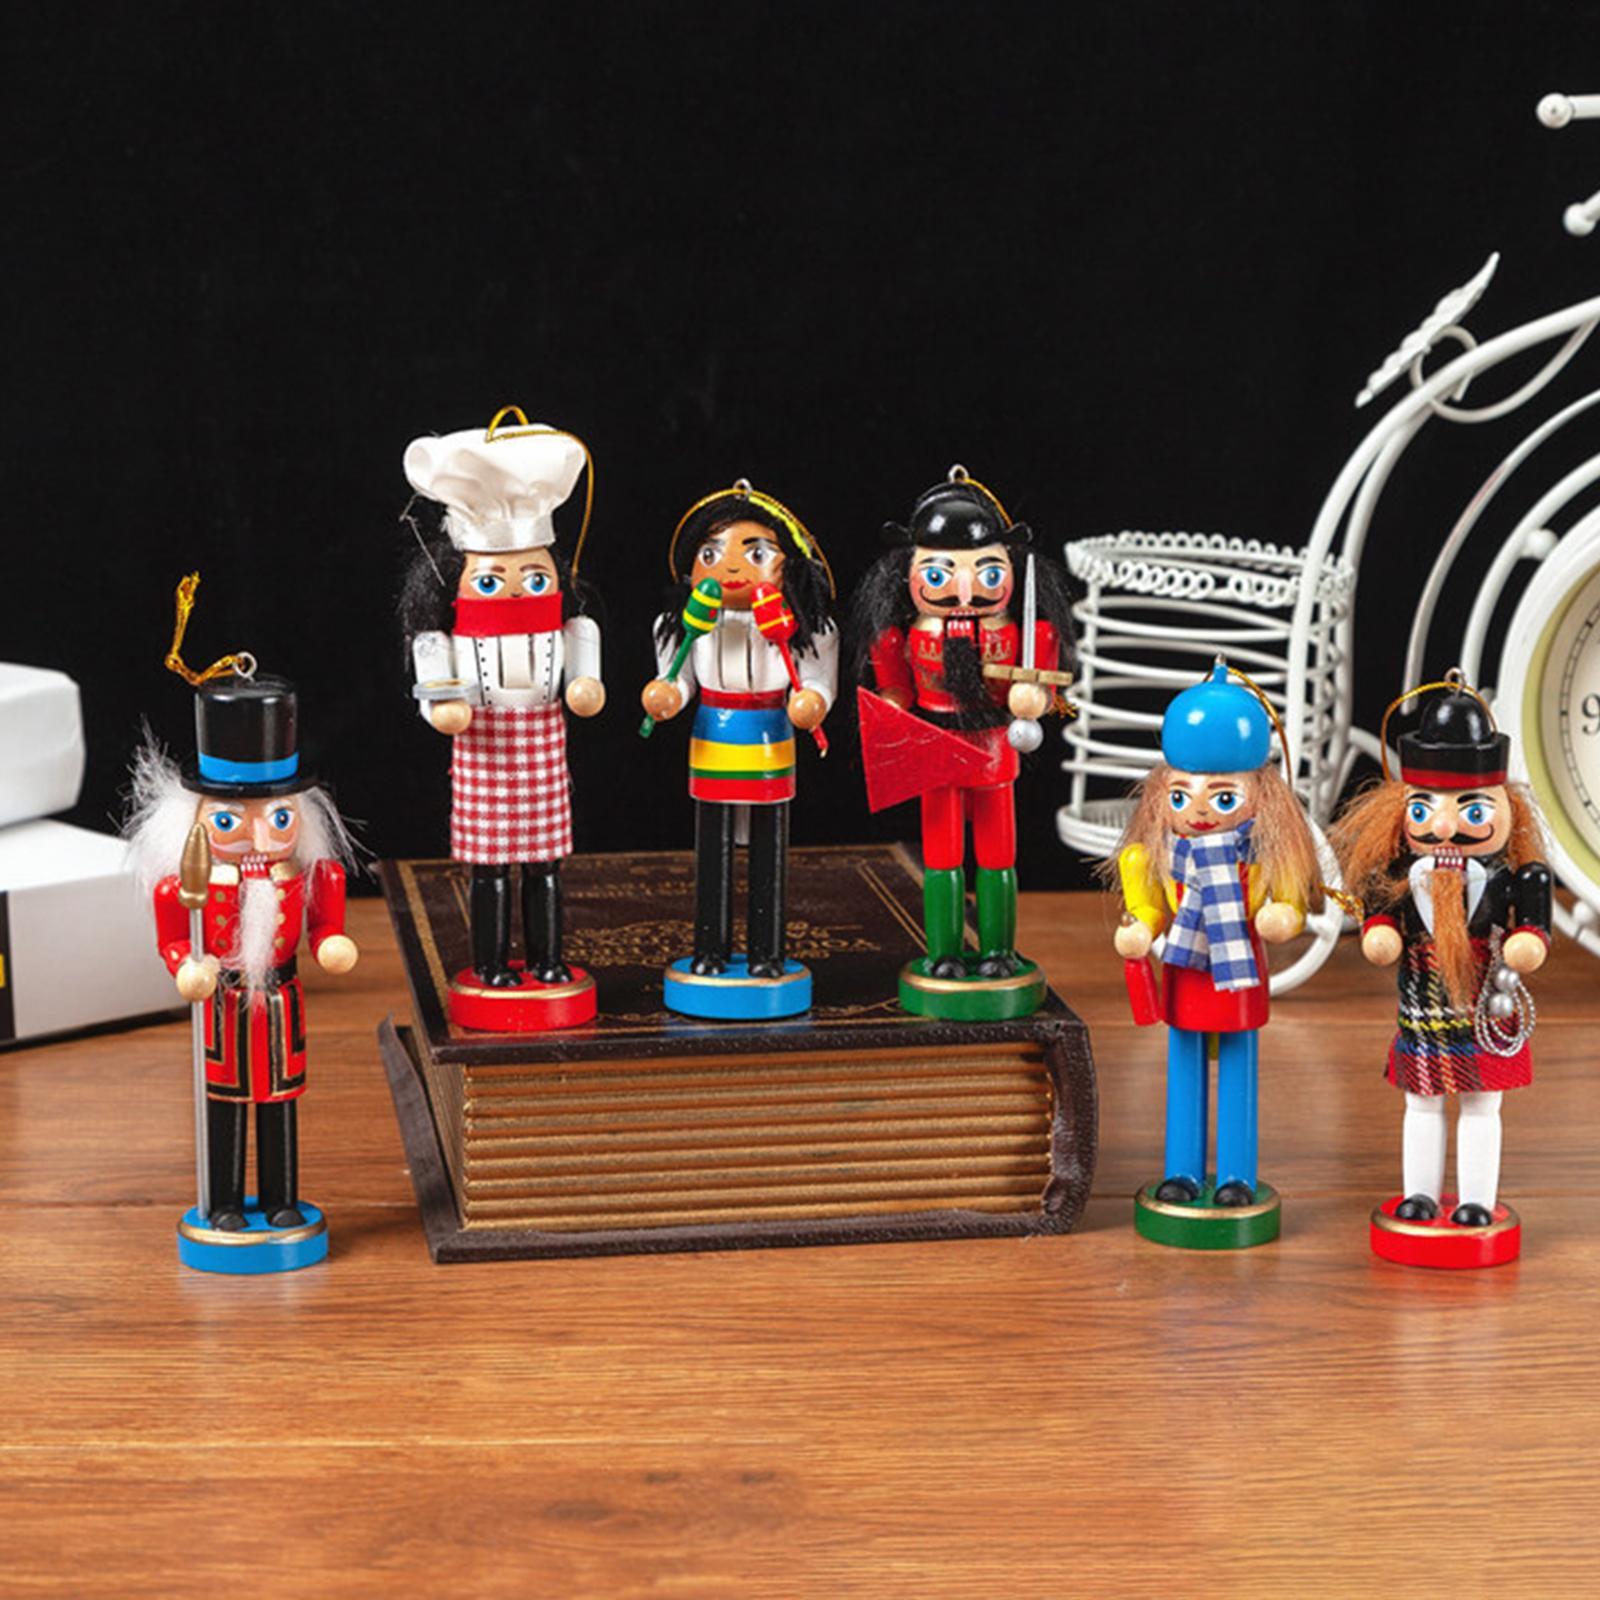 6 Pieces Wooden Nutcracker Christmas Nutcracker Figures for Kids Gifts Home